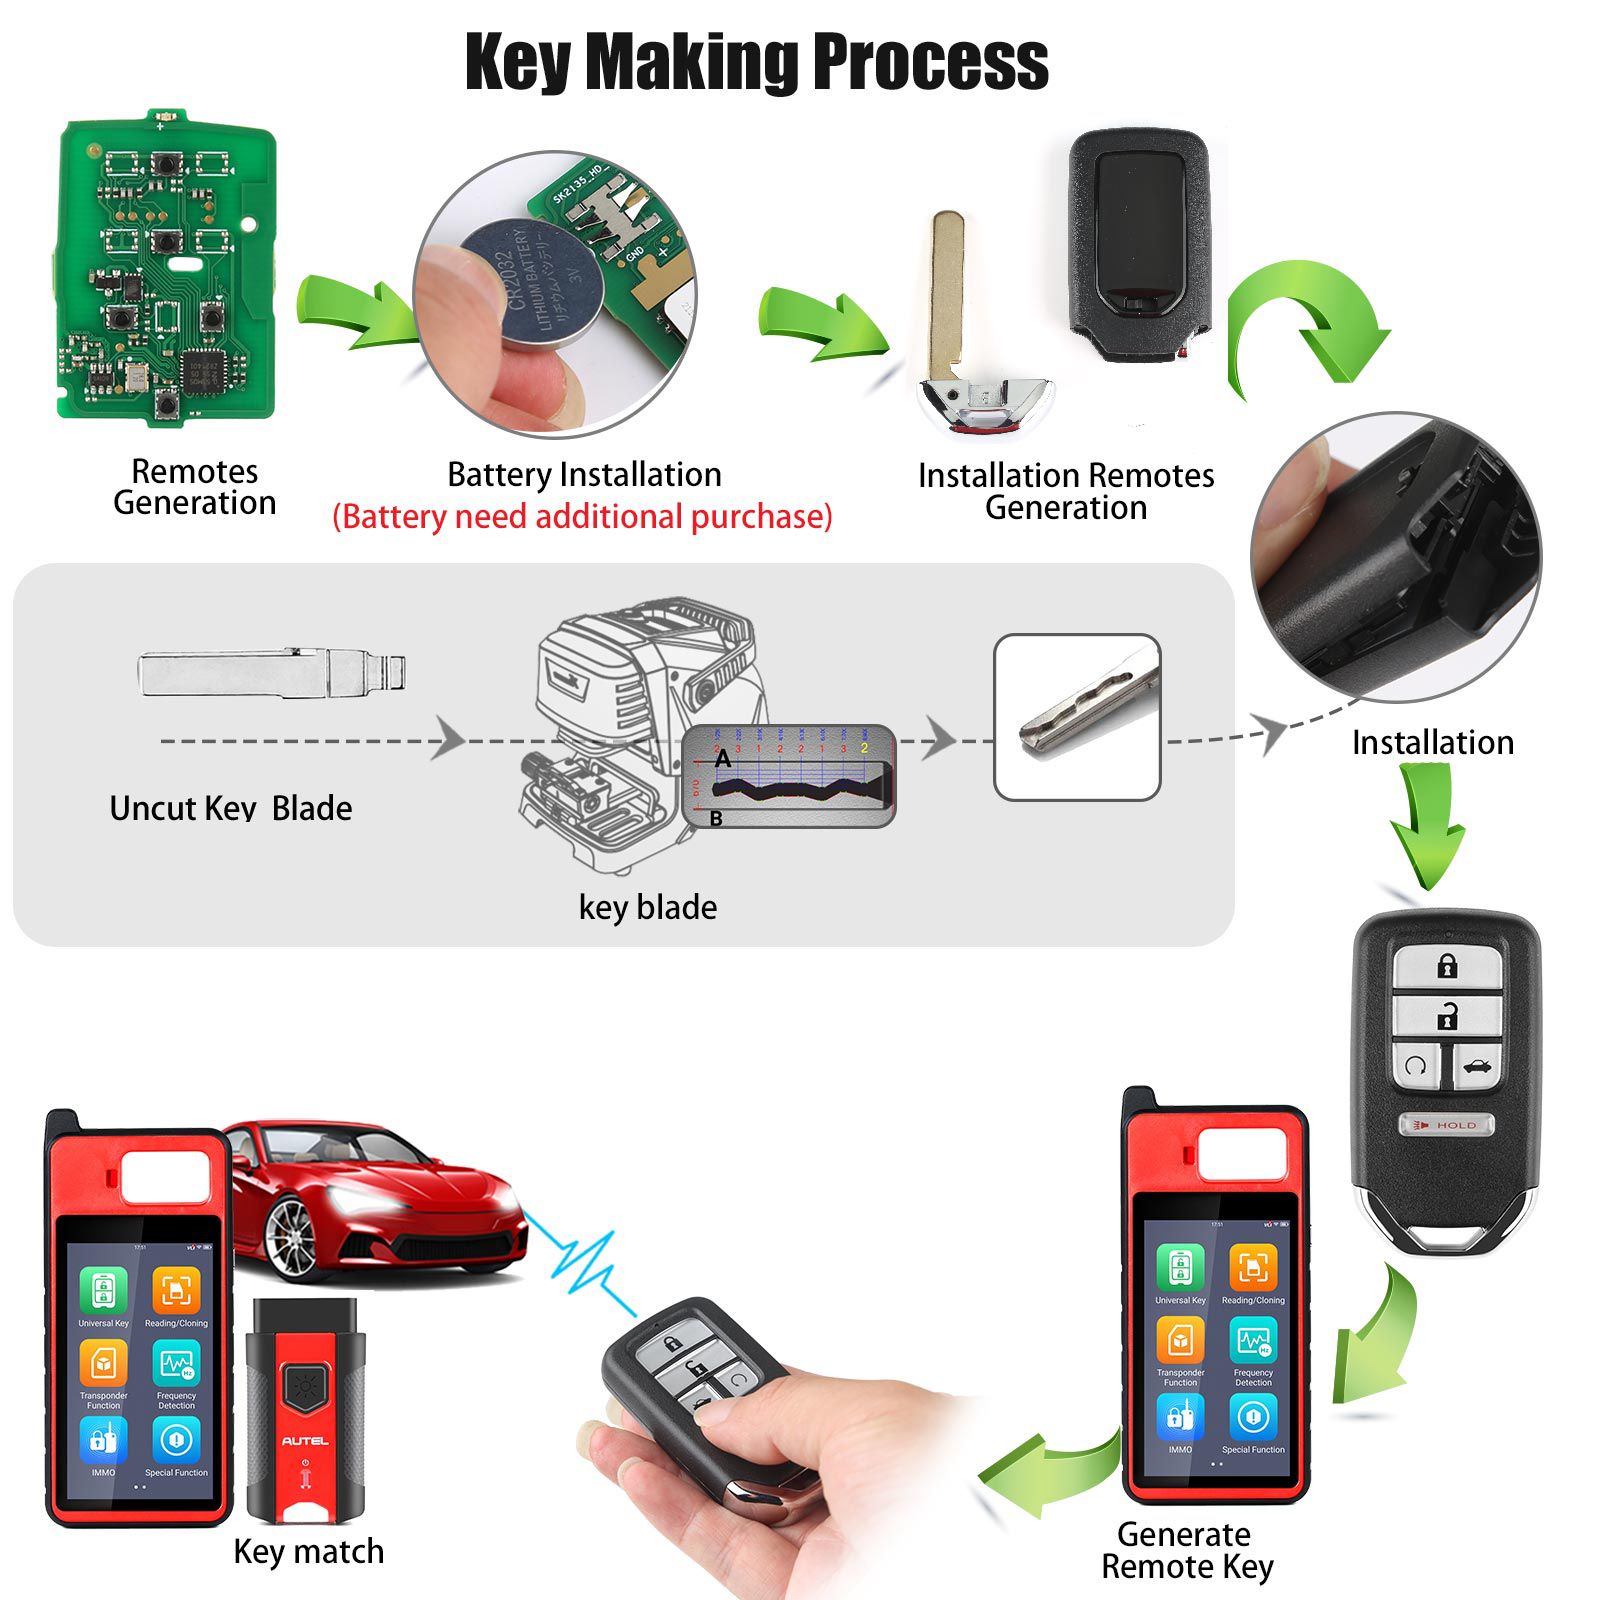 AUTEL IKEYHD005AL Honda 5 Buttons Universal Smart Key 5pcs/lot